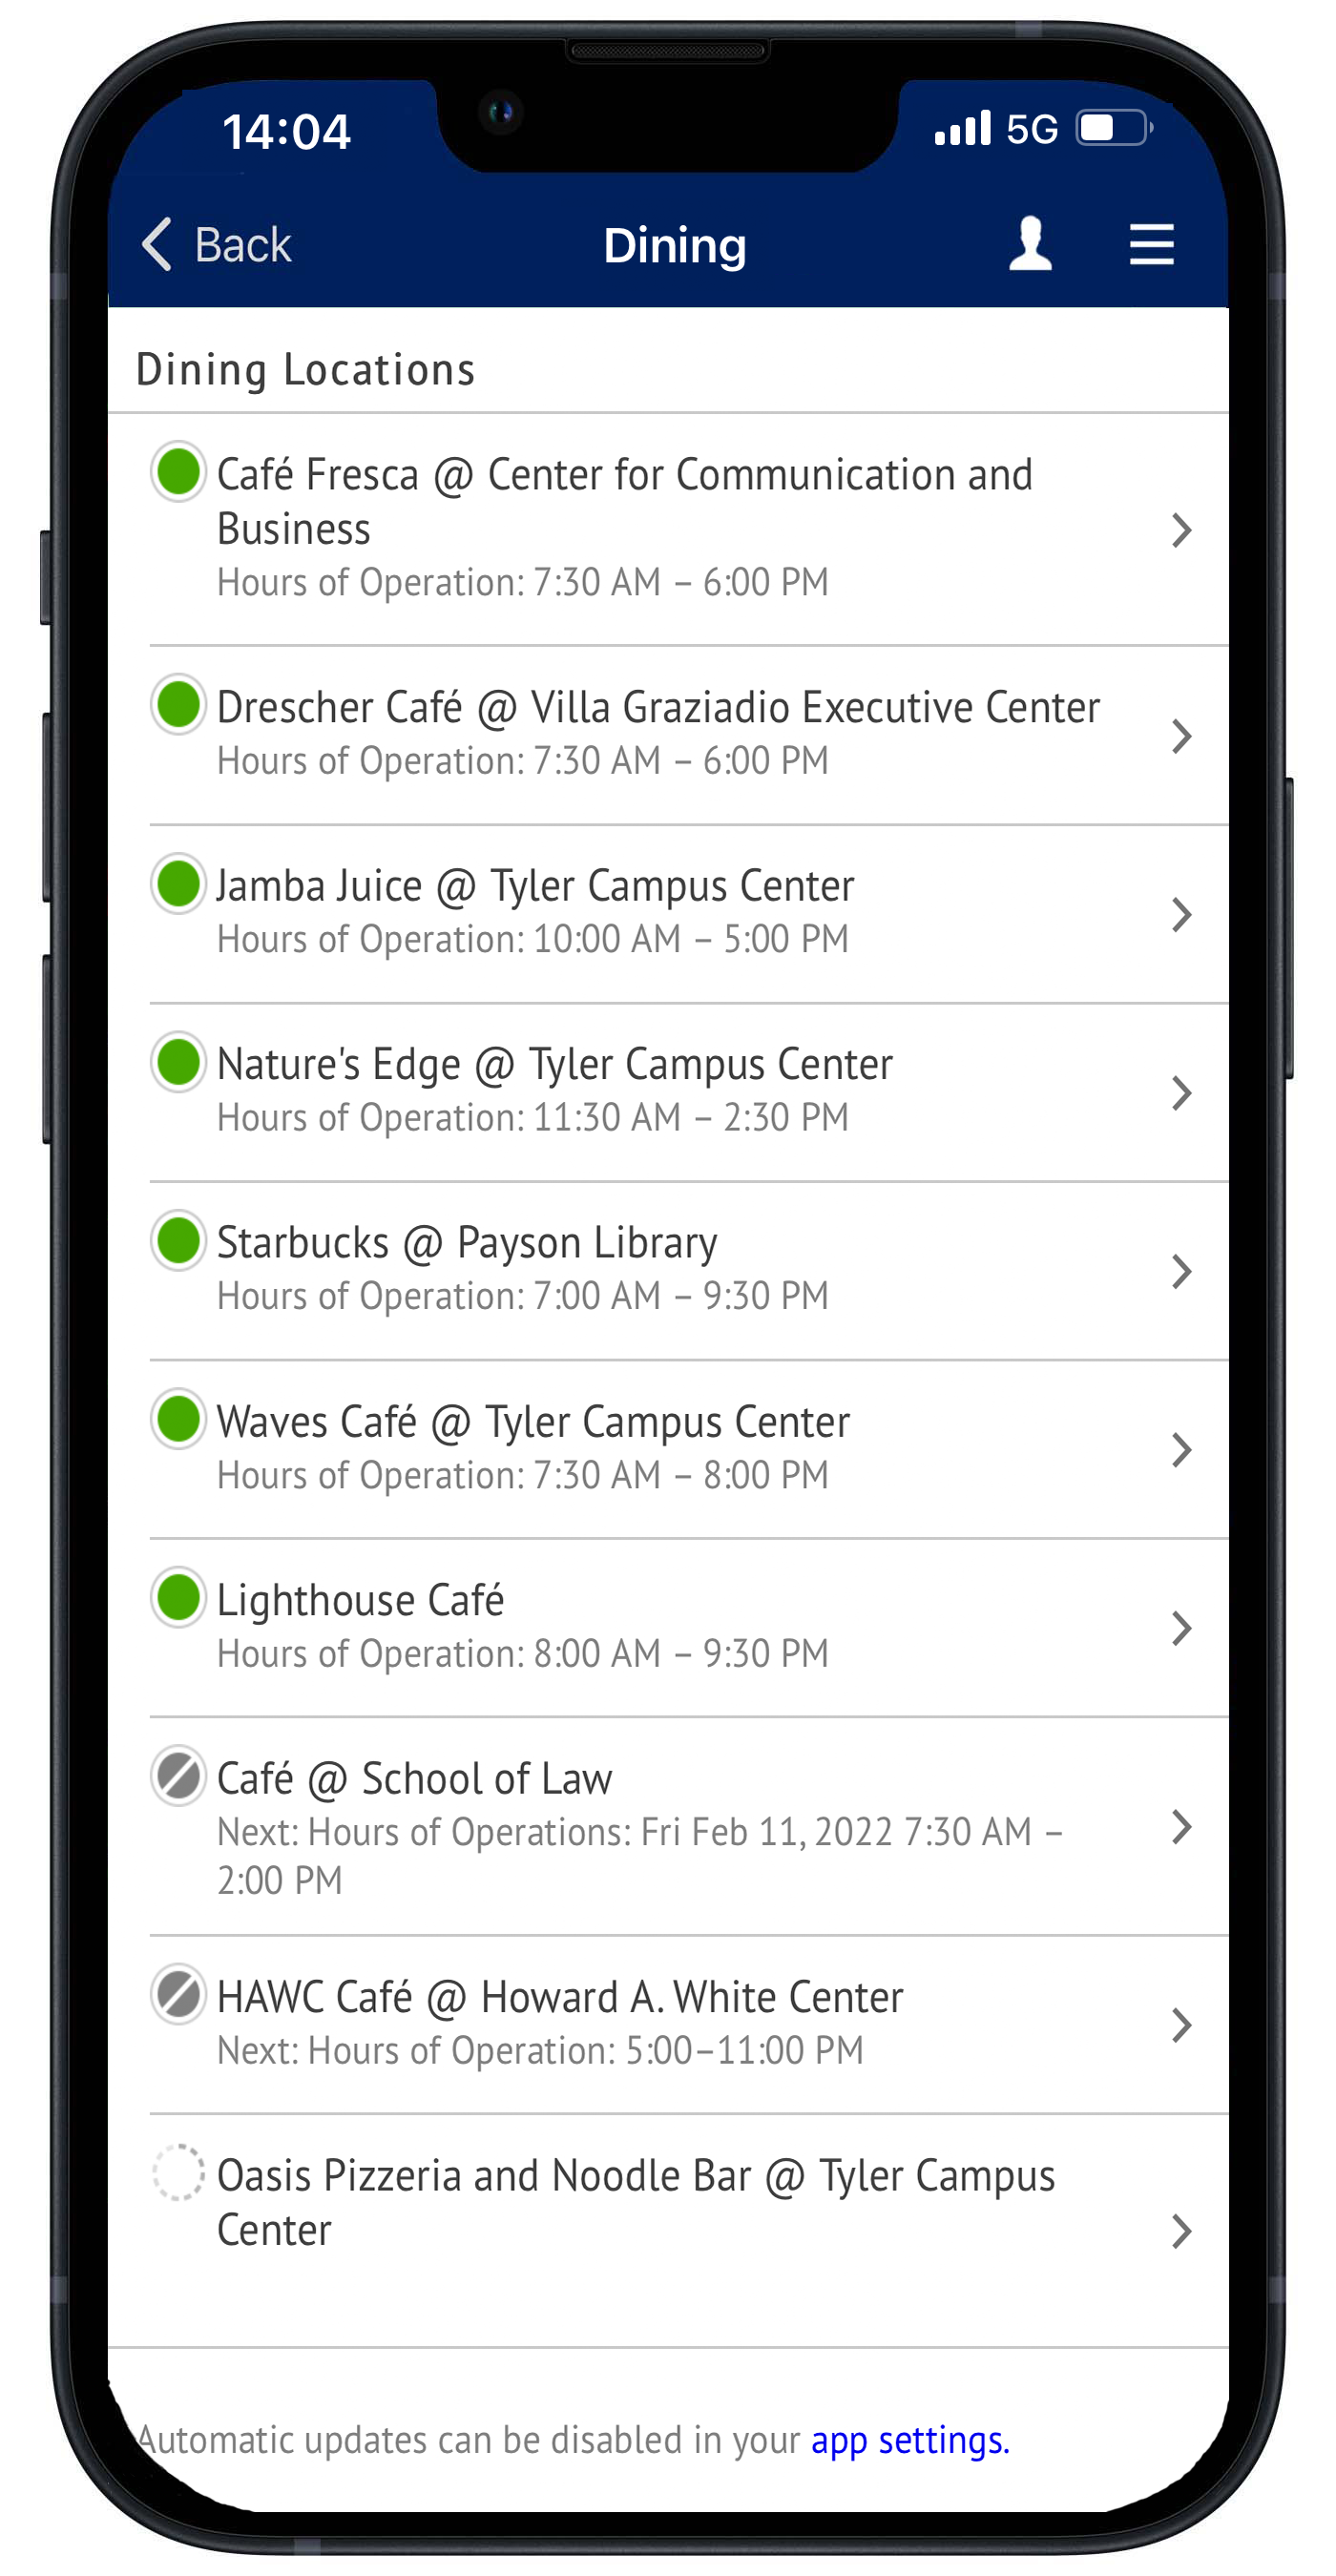 Pepperdine Mobile App dining locations screen